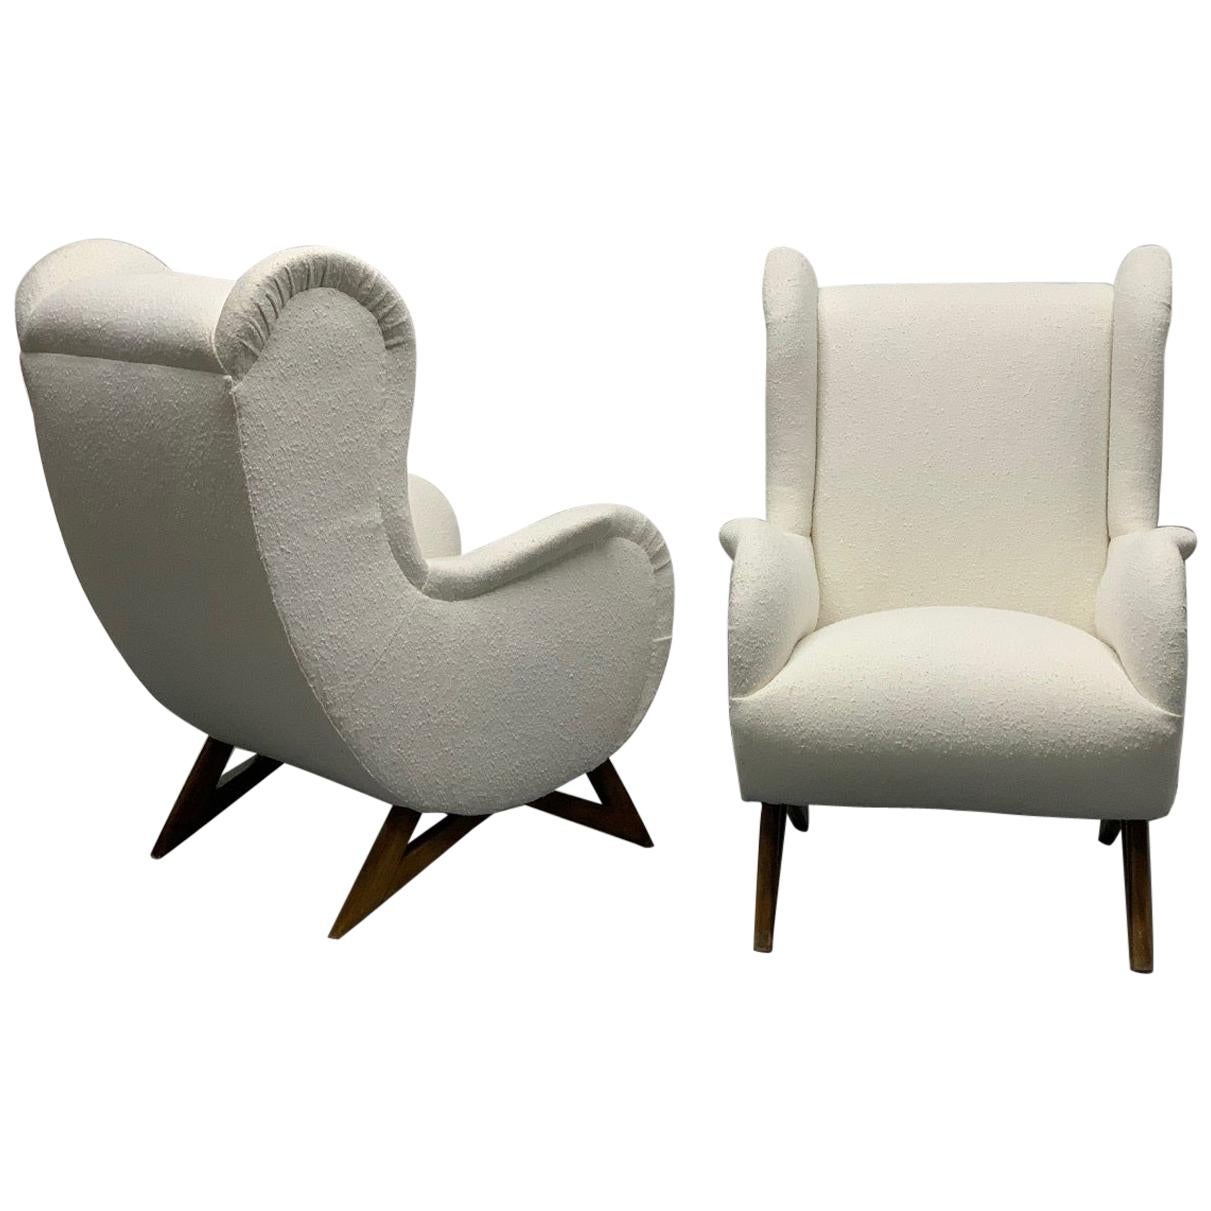 Pair of 1960s Italian Lounge Chairs